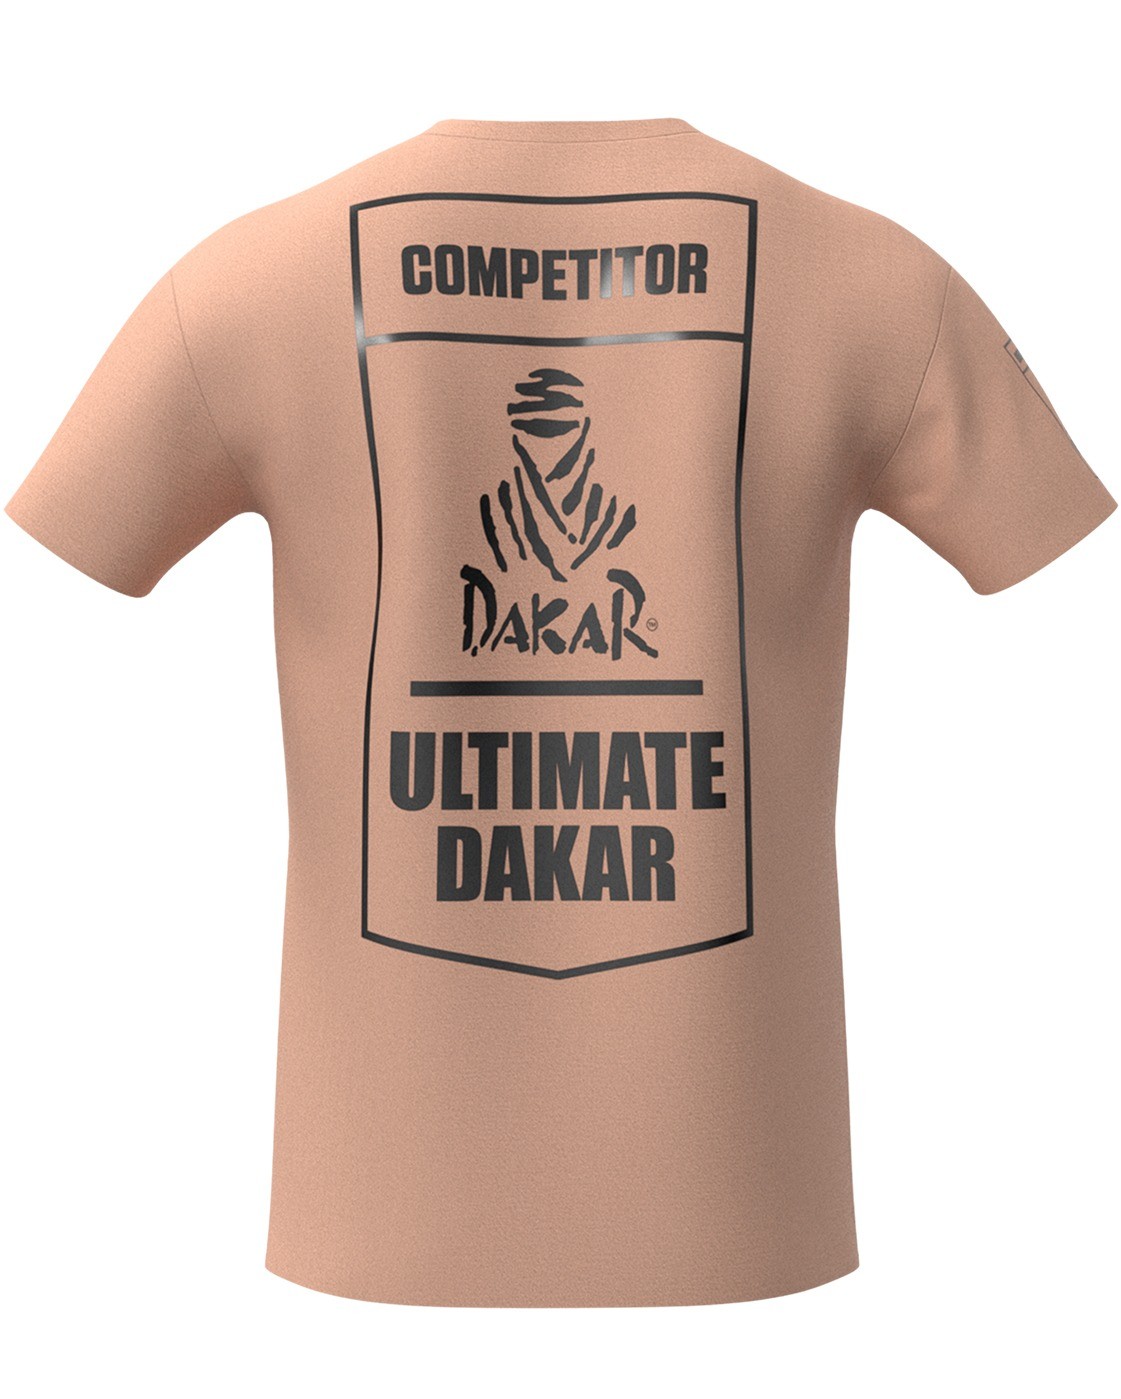 ULTIMATE DAKAR T-shirt Sand